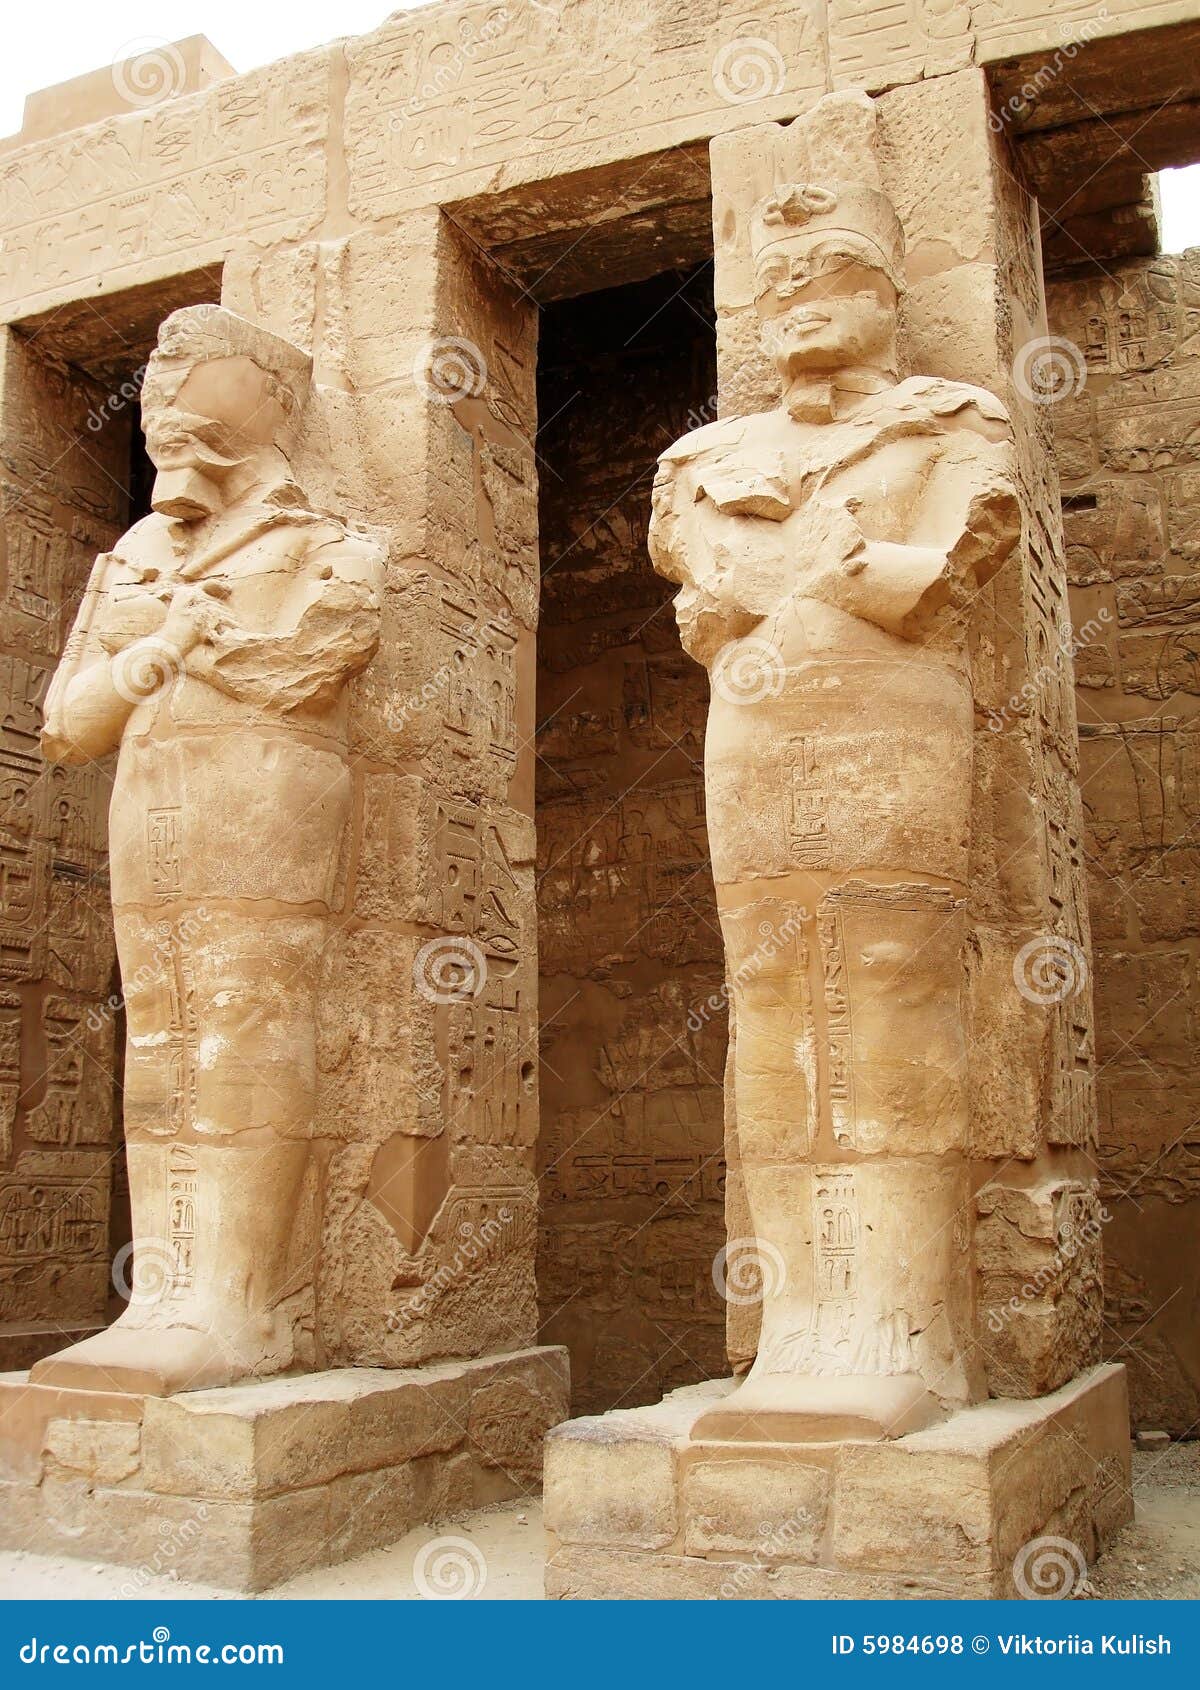 ancient statues